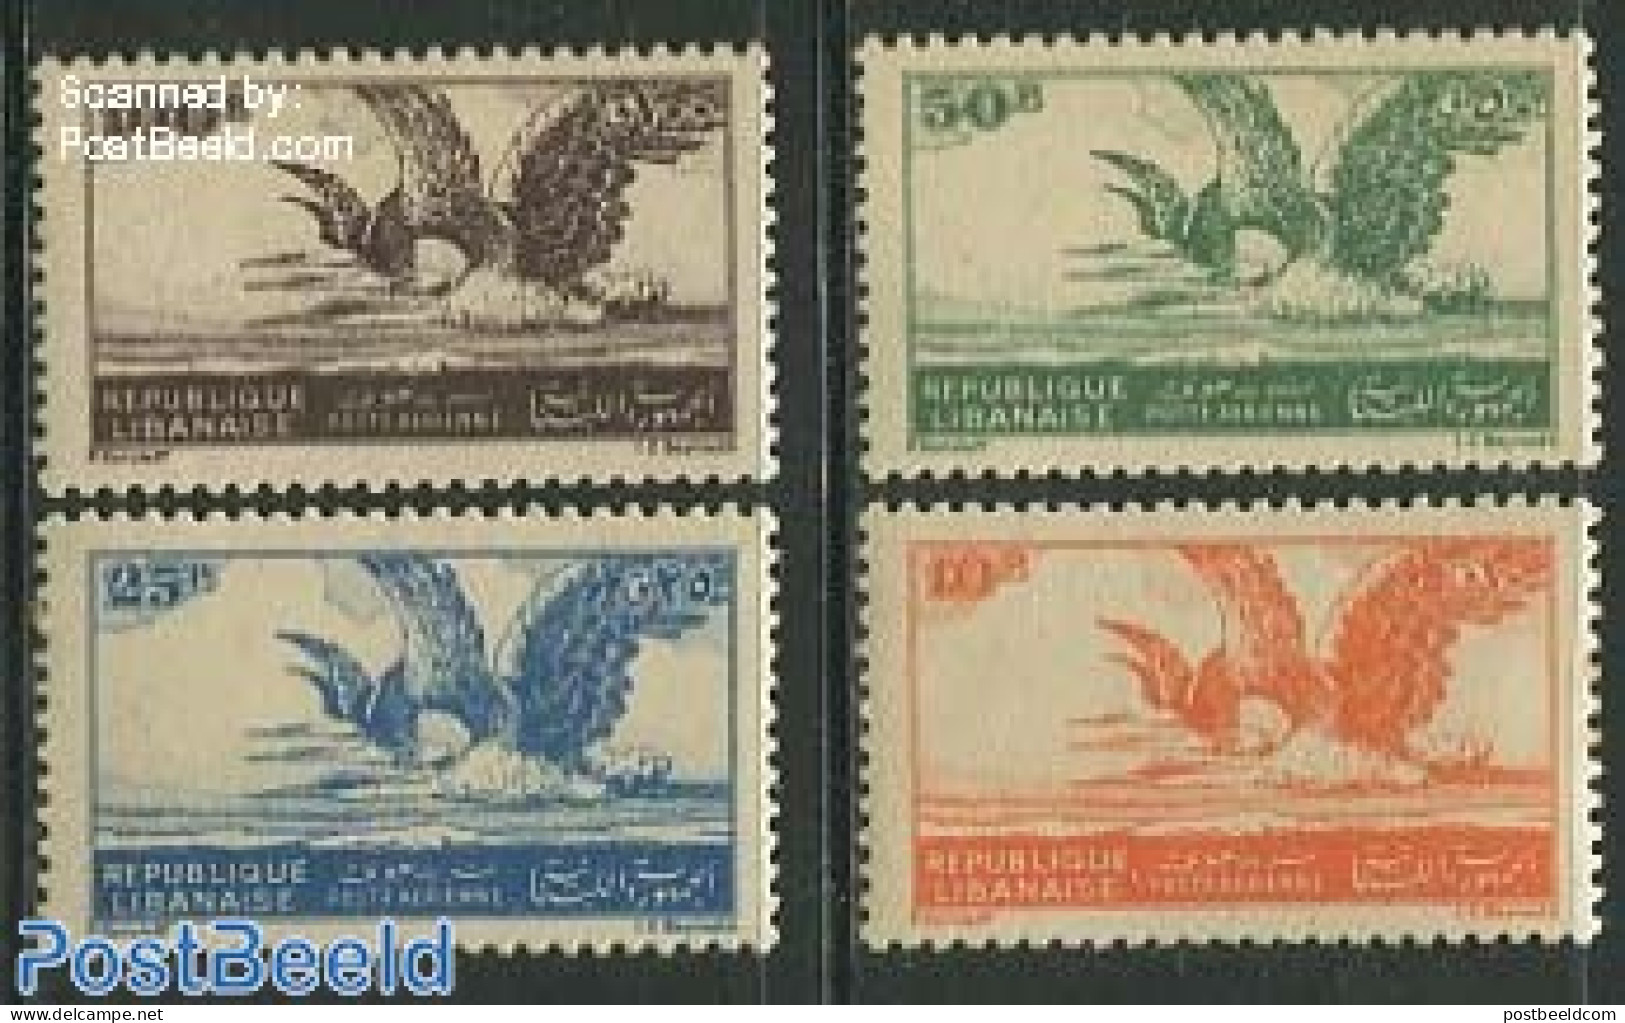 Lebanon 1946 Airmail Definitives 4v, Mint NH, Nature - Birds - Liban